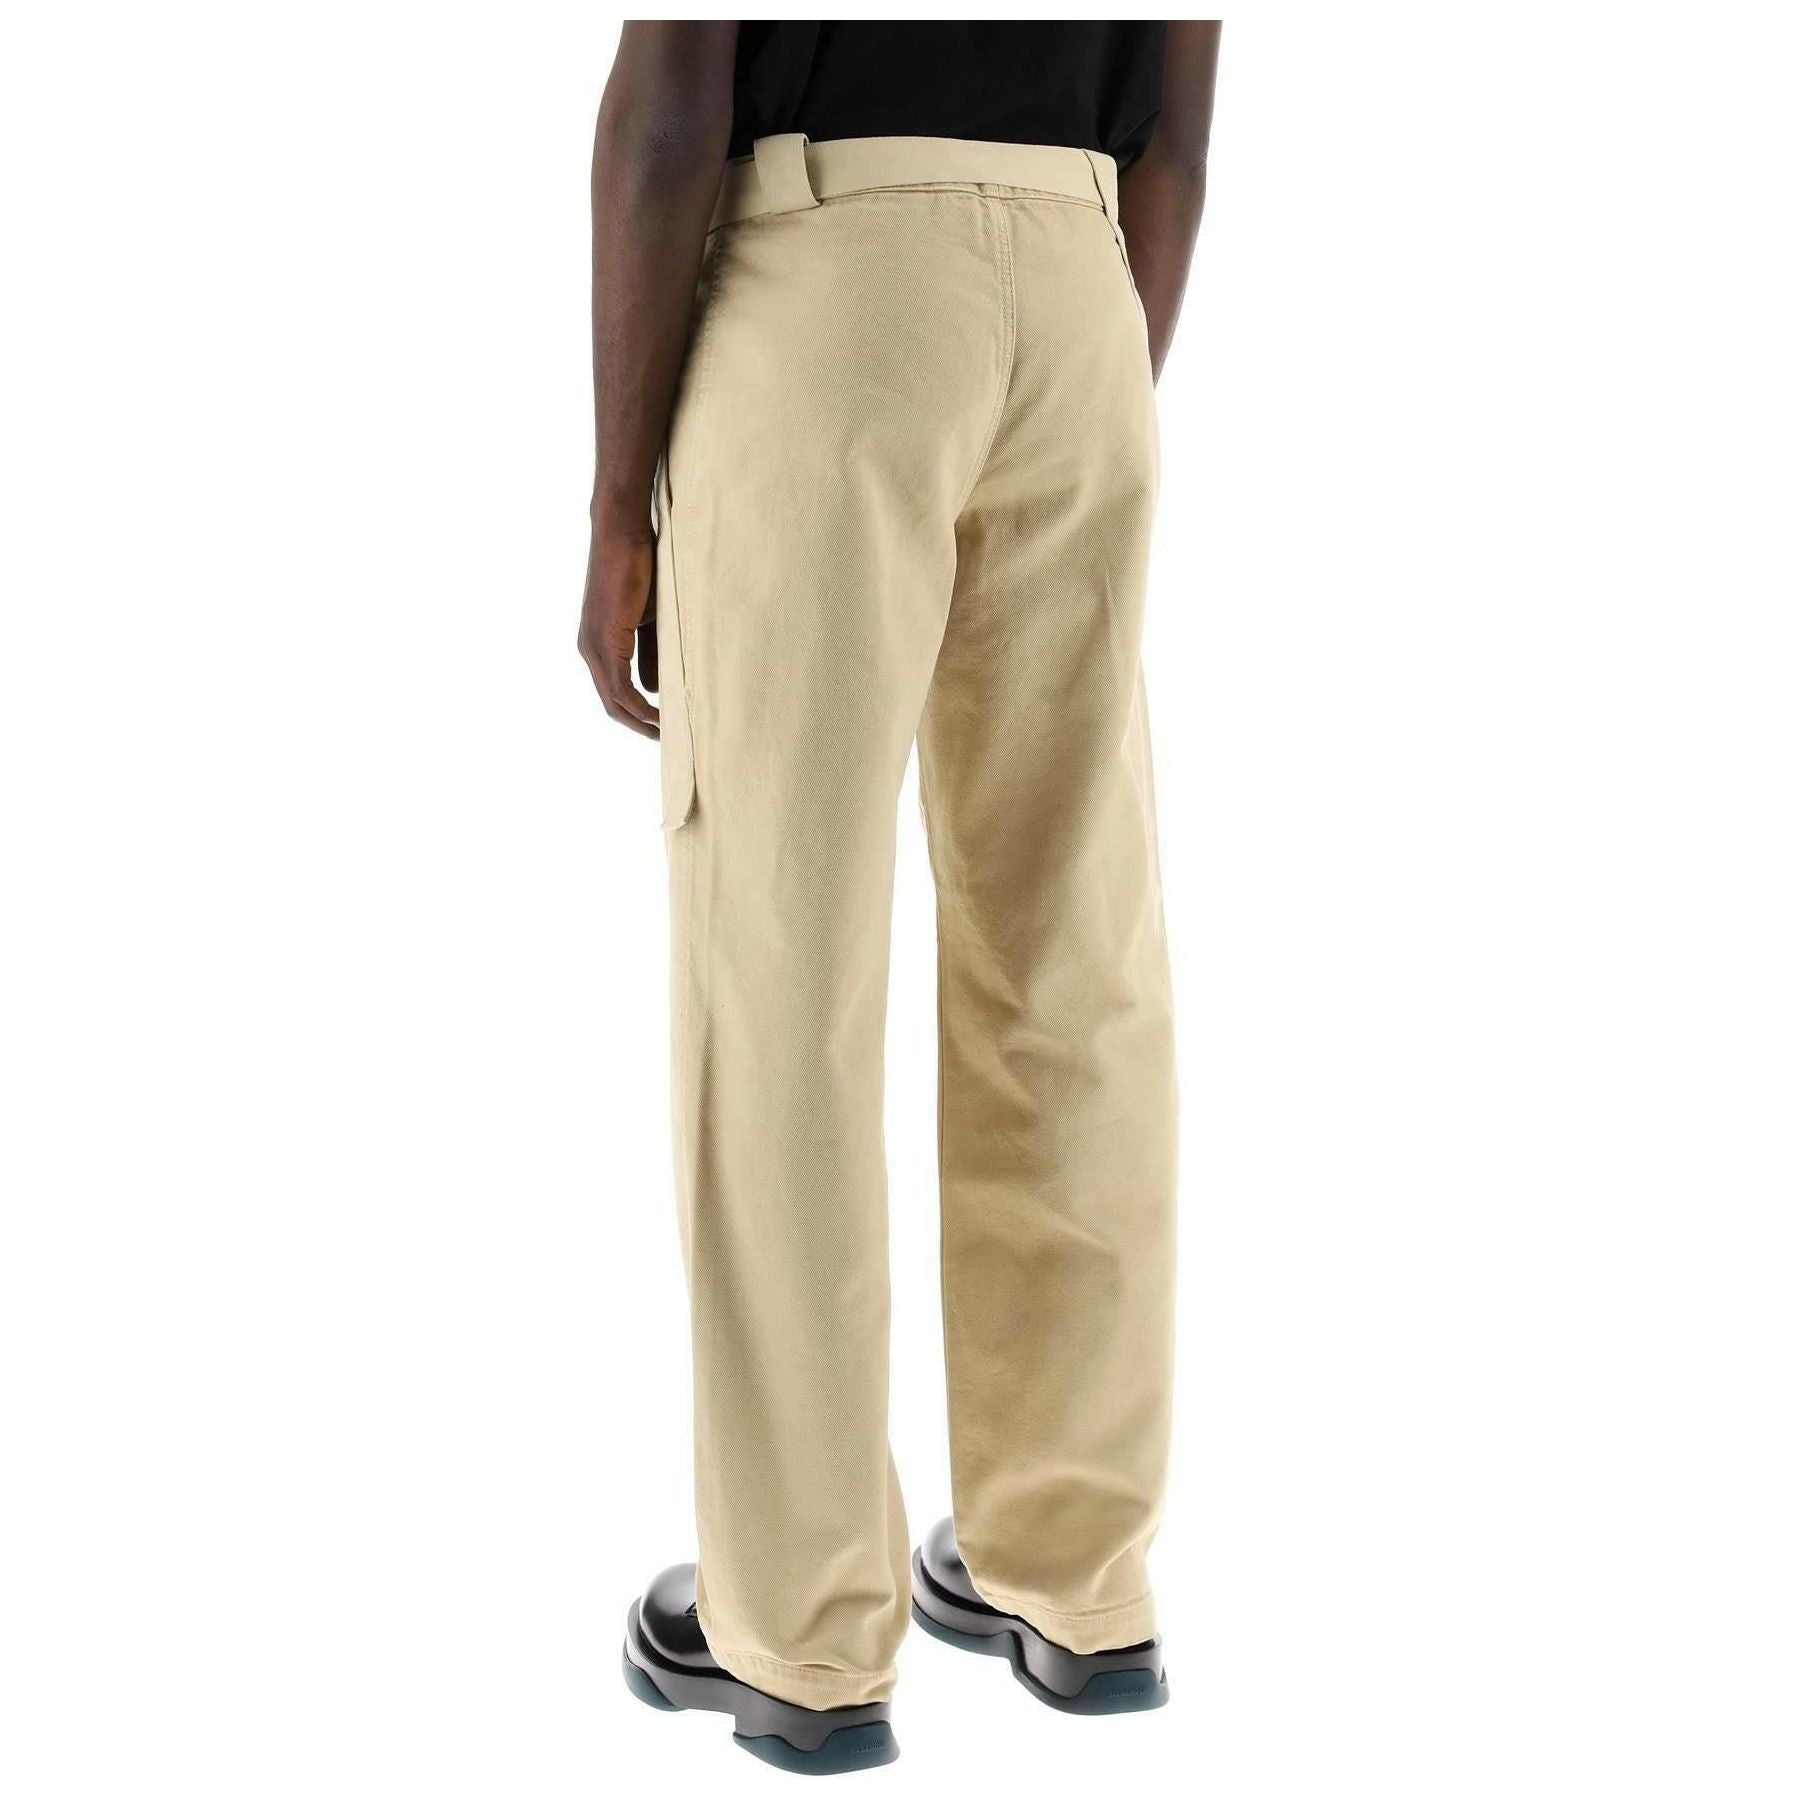 The Brown' Cotton Pants with removable belt JACQUEMUS JOHN JULIA.